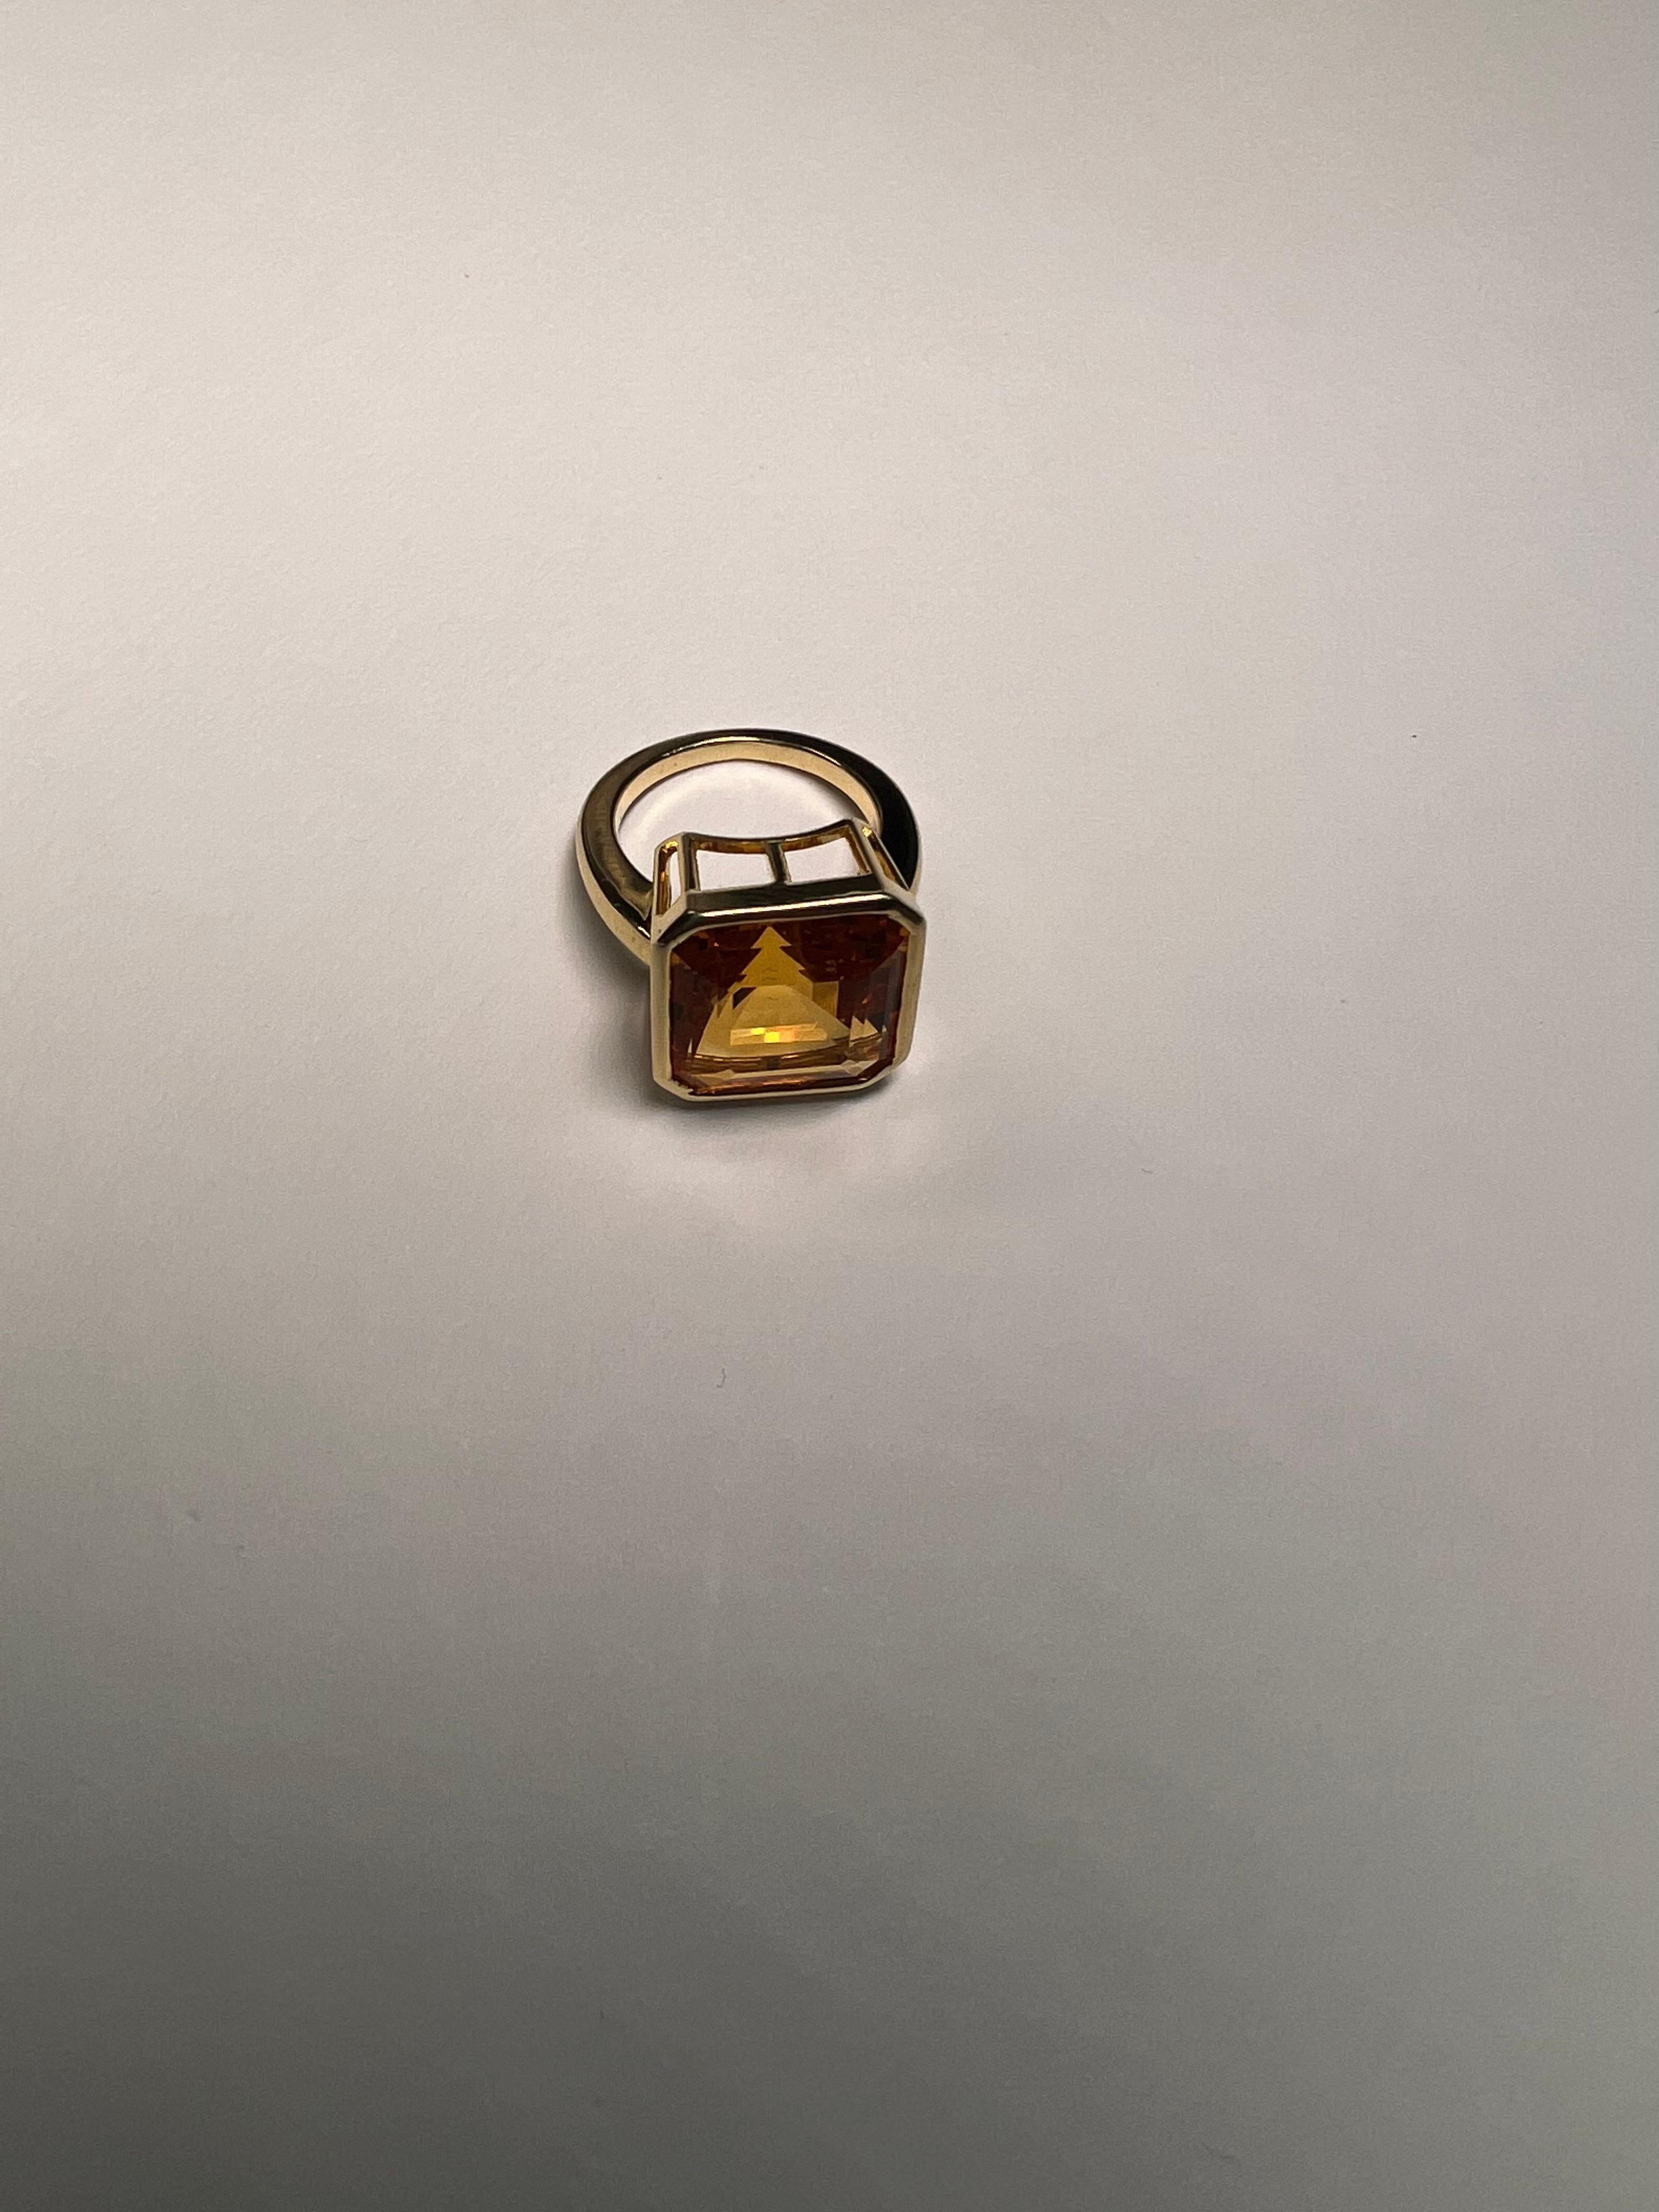 Rare 7.88ct Orange Citrine Pinky Ring, Bezel Set & Handmade in 14k Yellow Gold For Sale 7